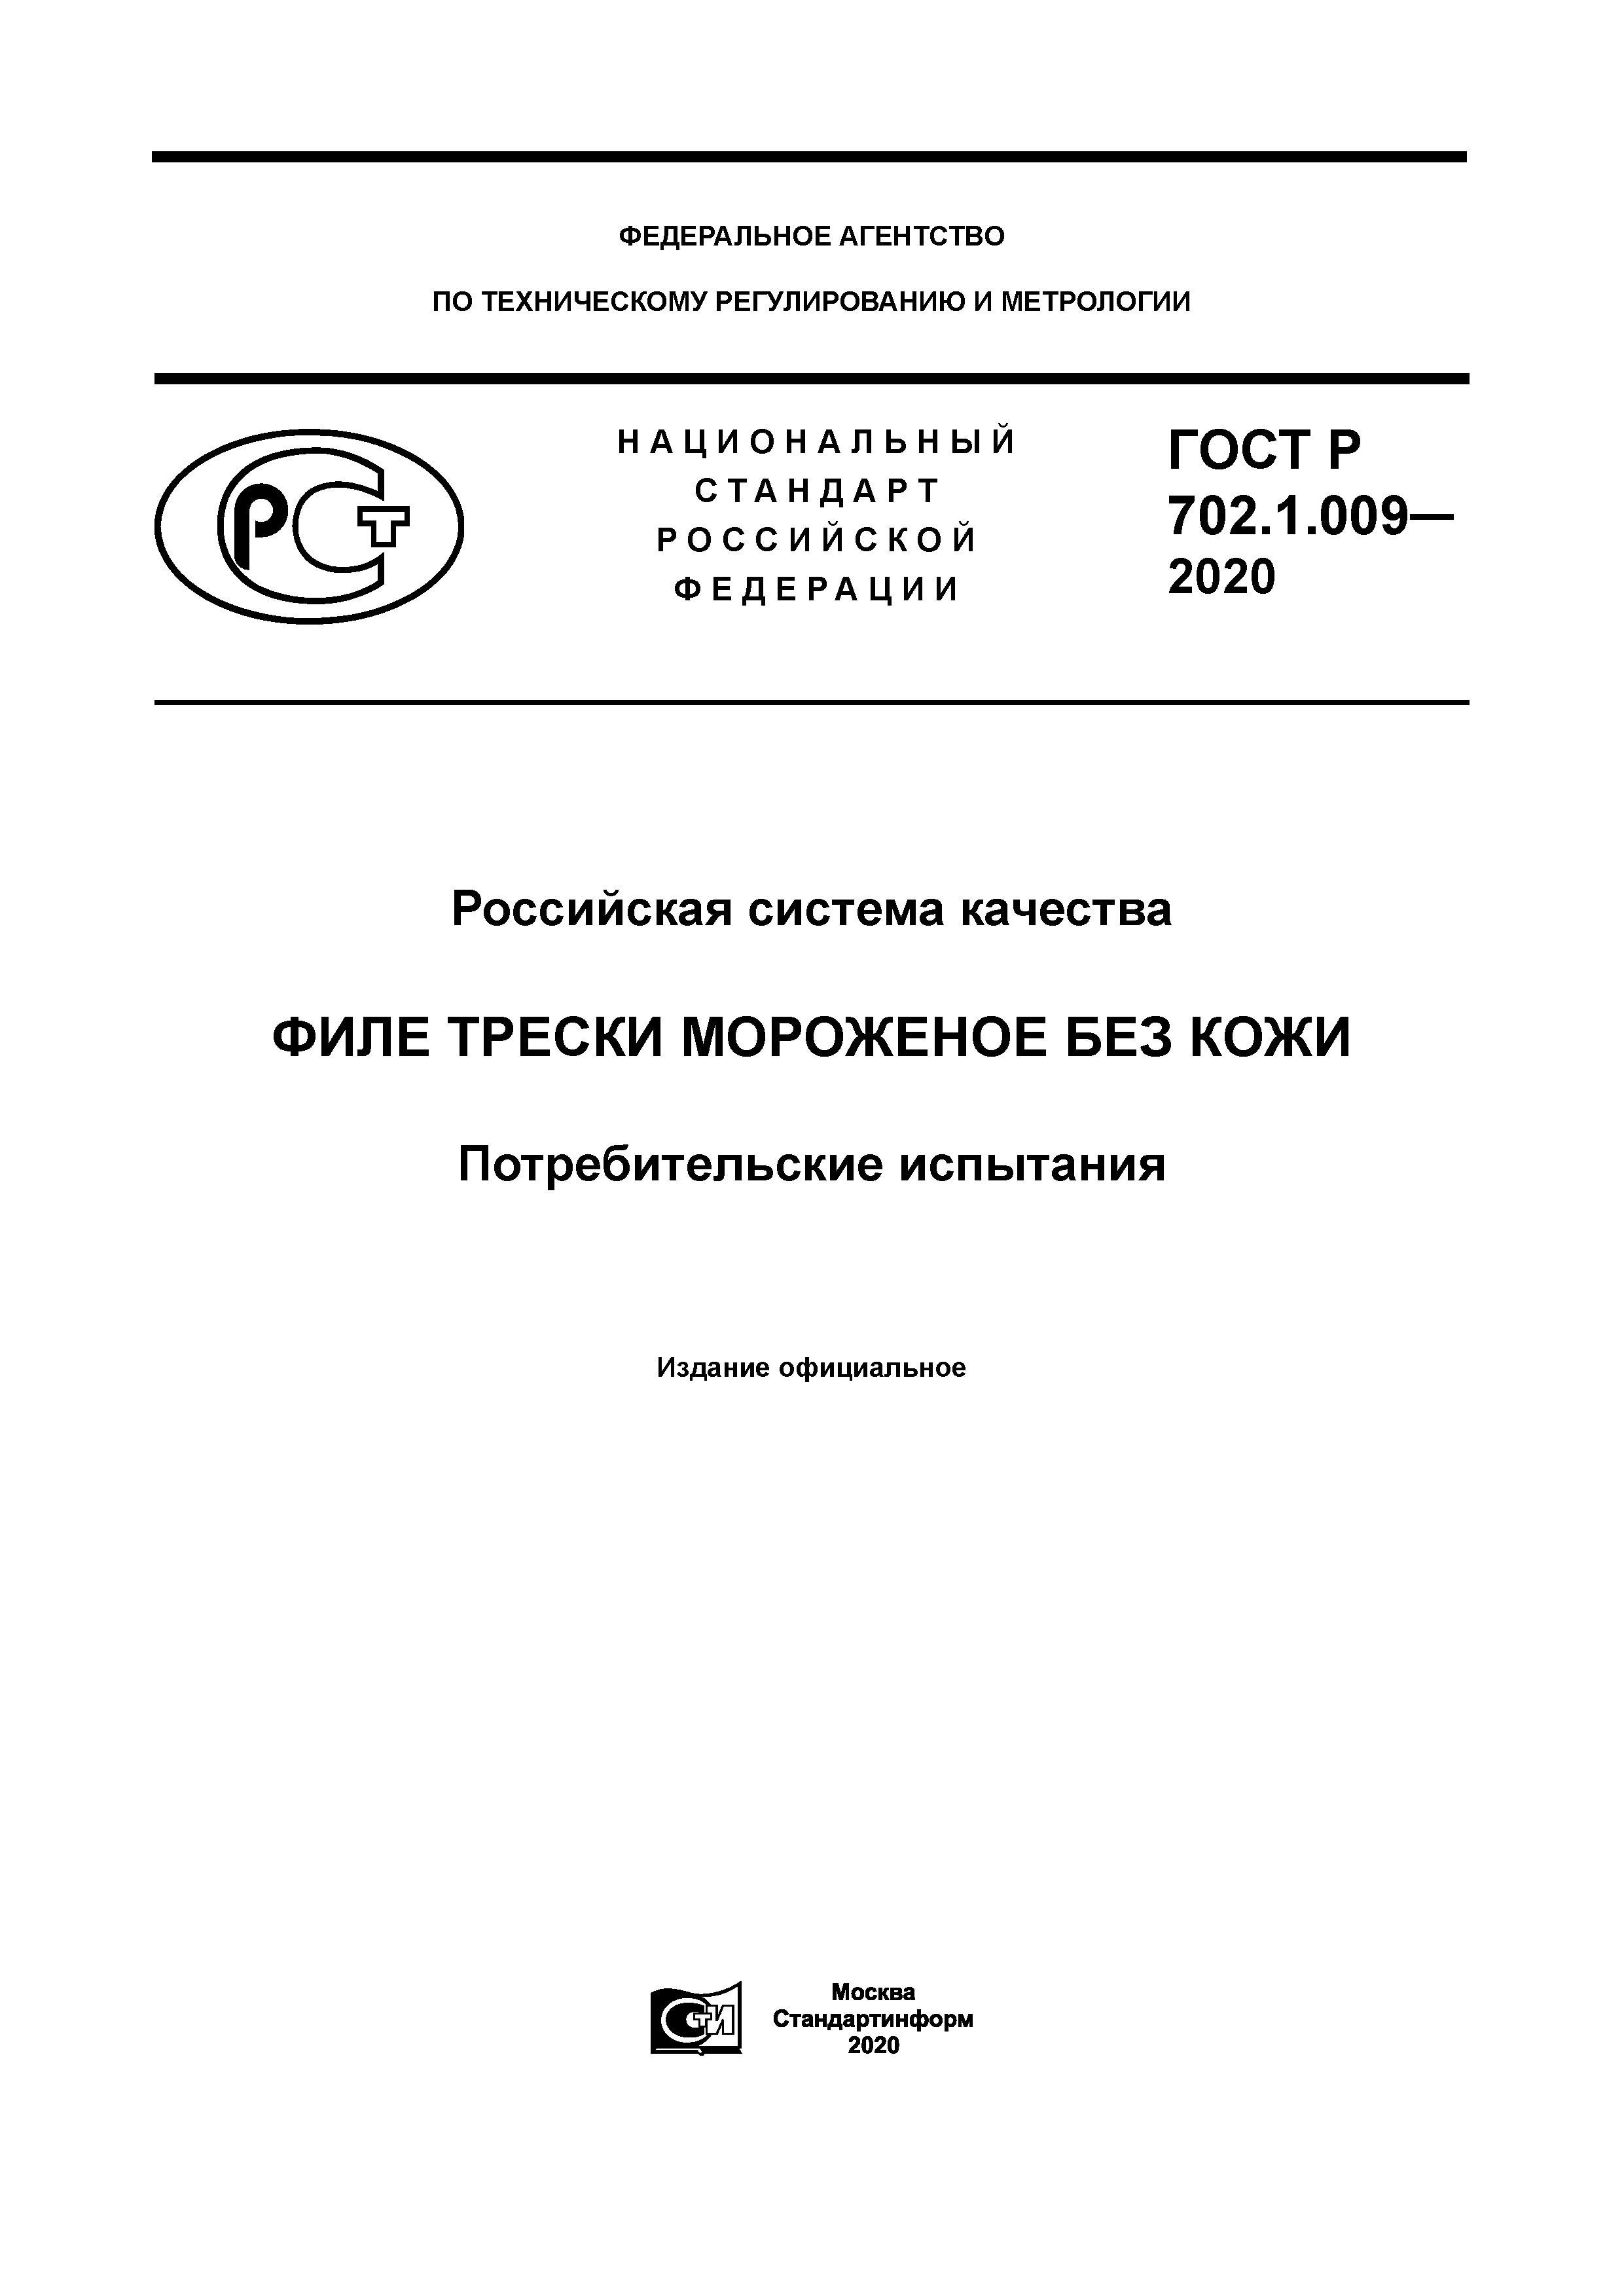 ГОСТ Р 702.1.009-2020